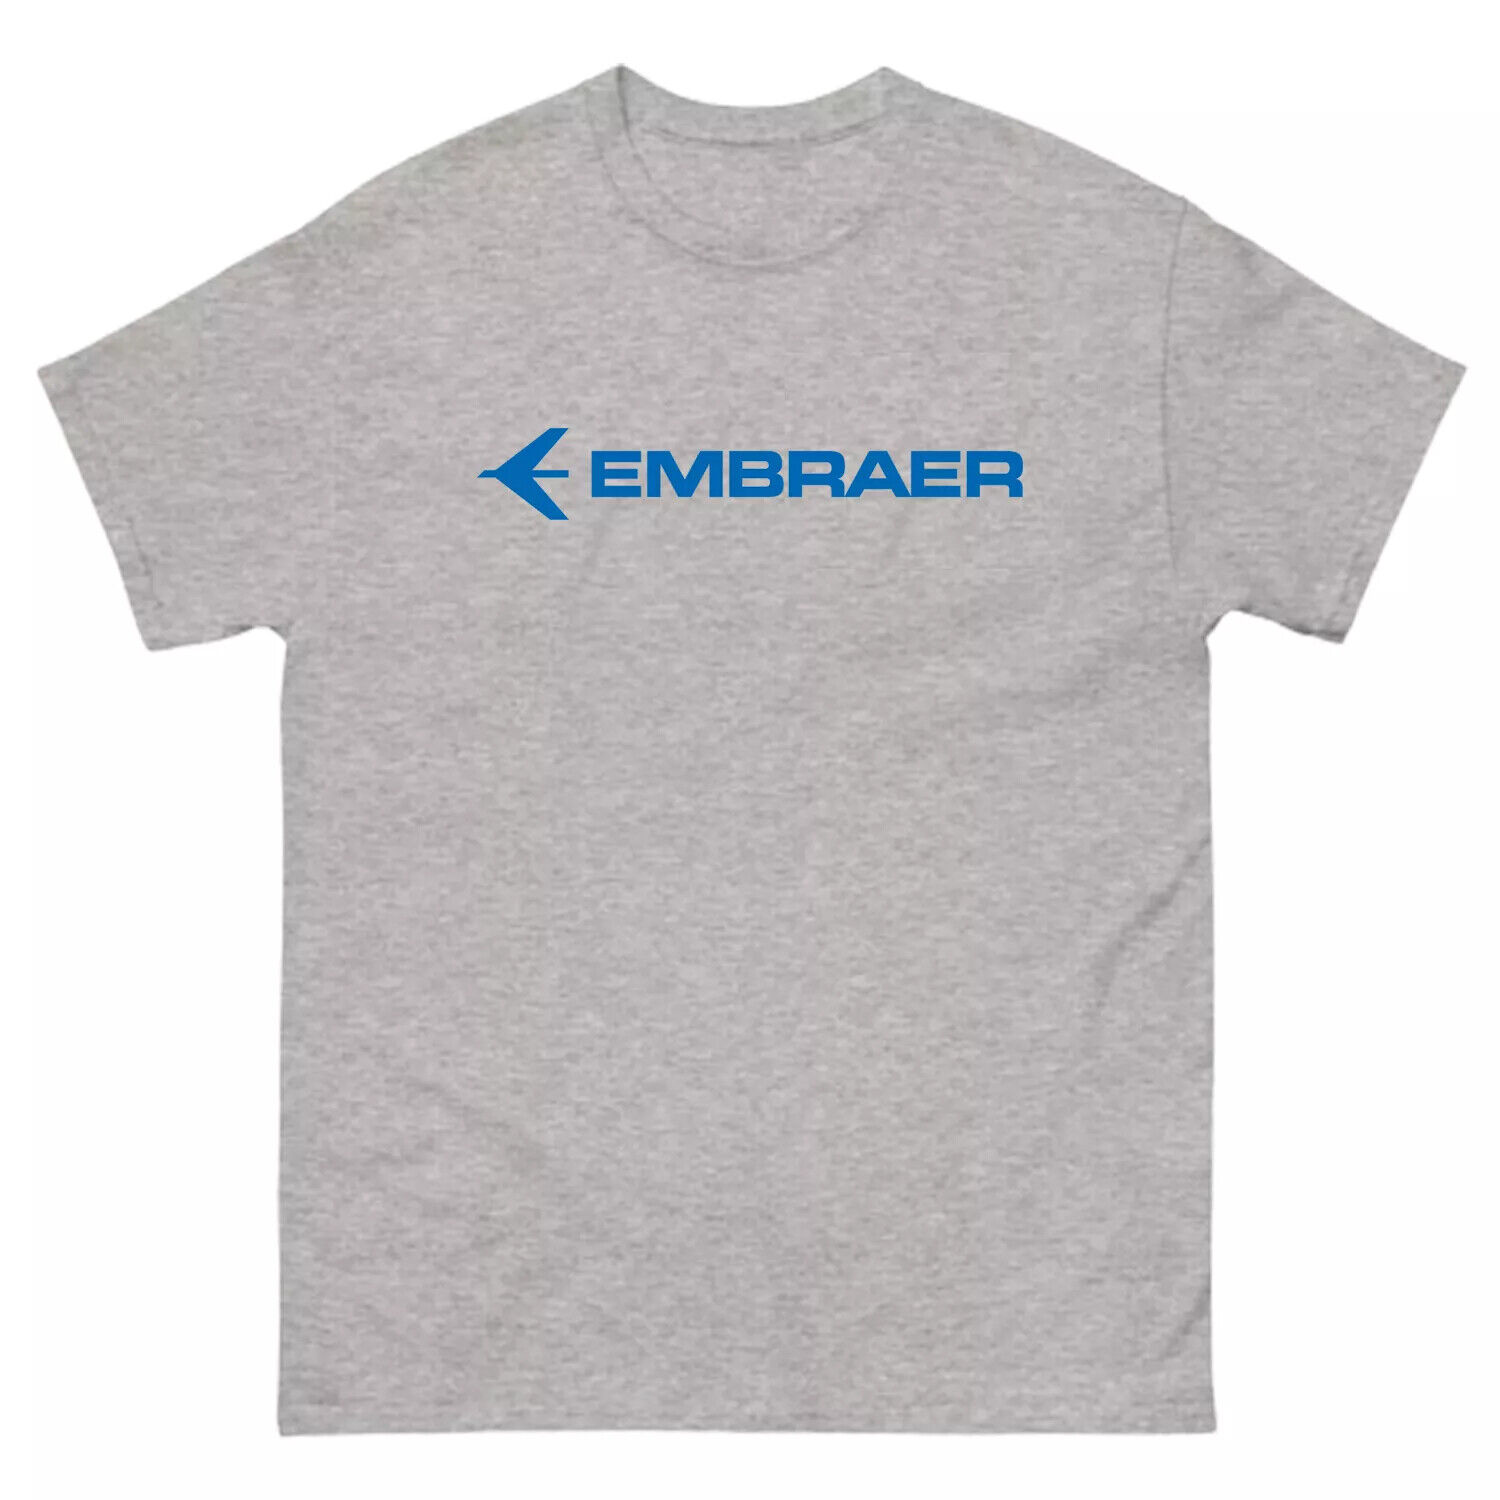 Embraer Airplanes Aircraft Retro Vintage Unisex T-shirt S-5XL